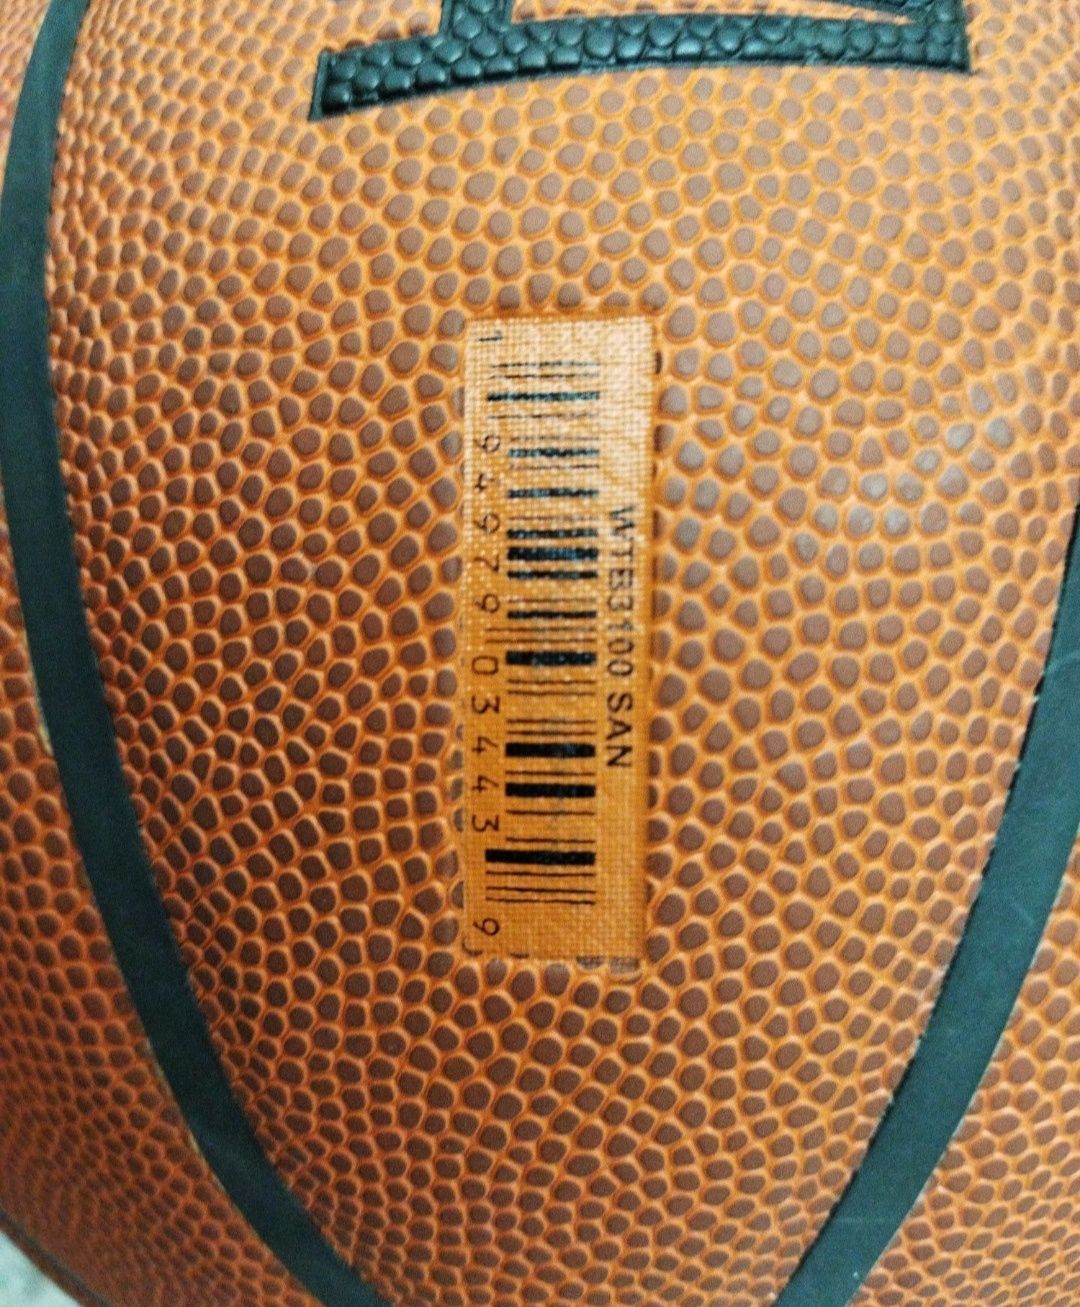 Wilson мяч ,7 размер,оригинал